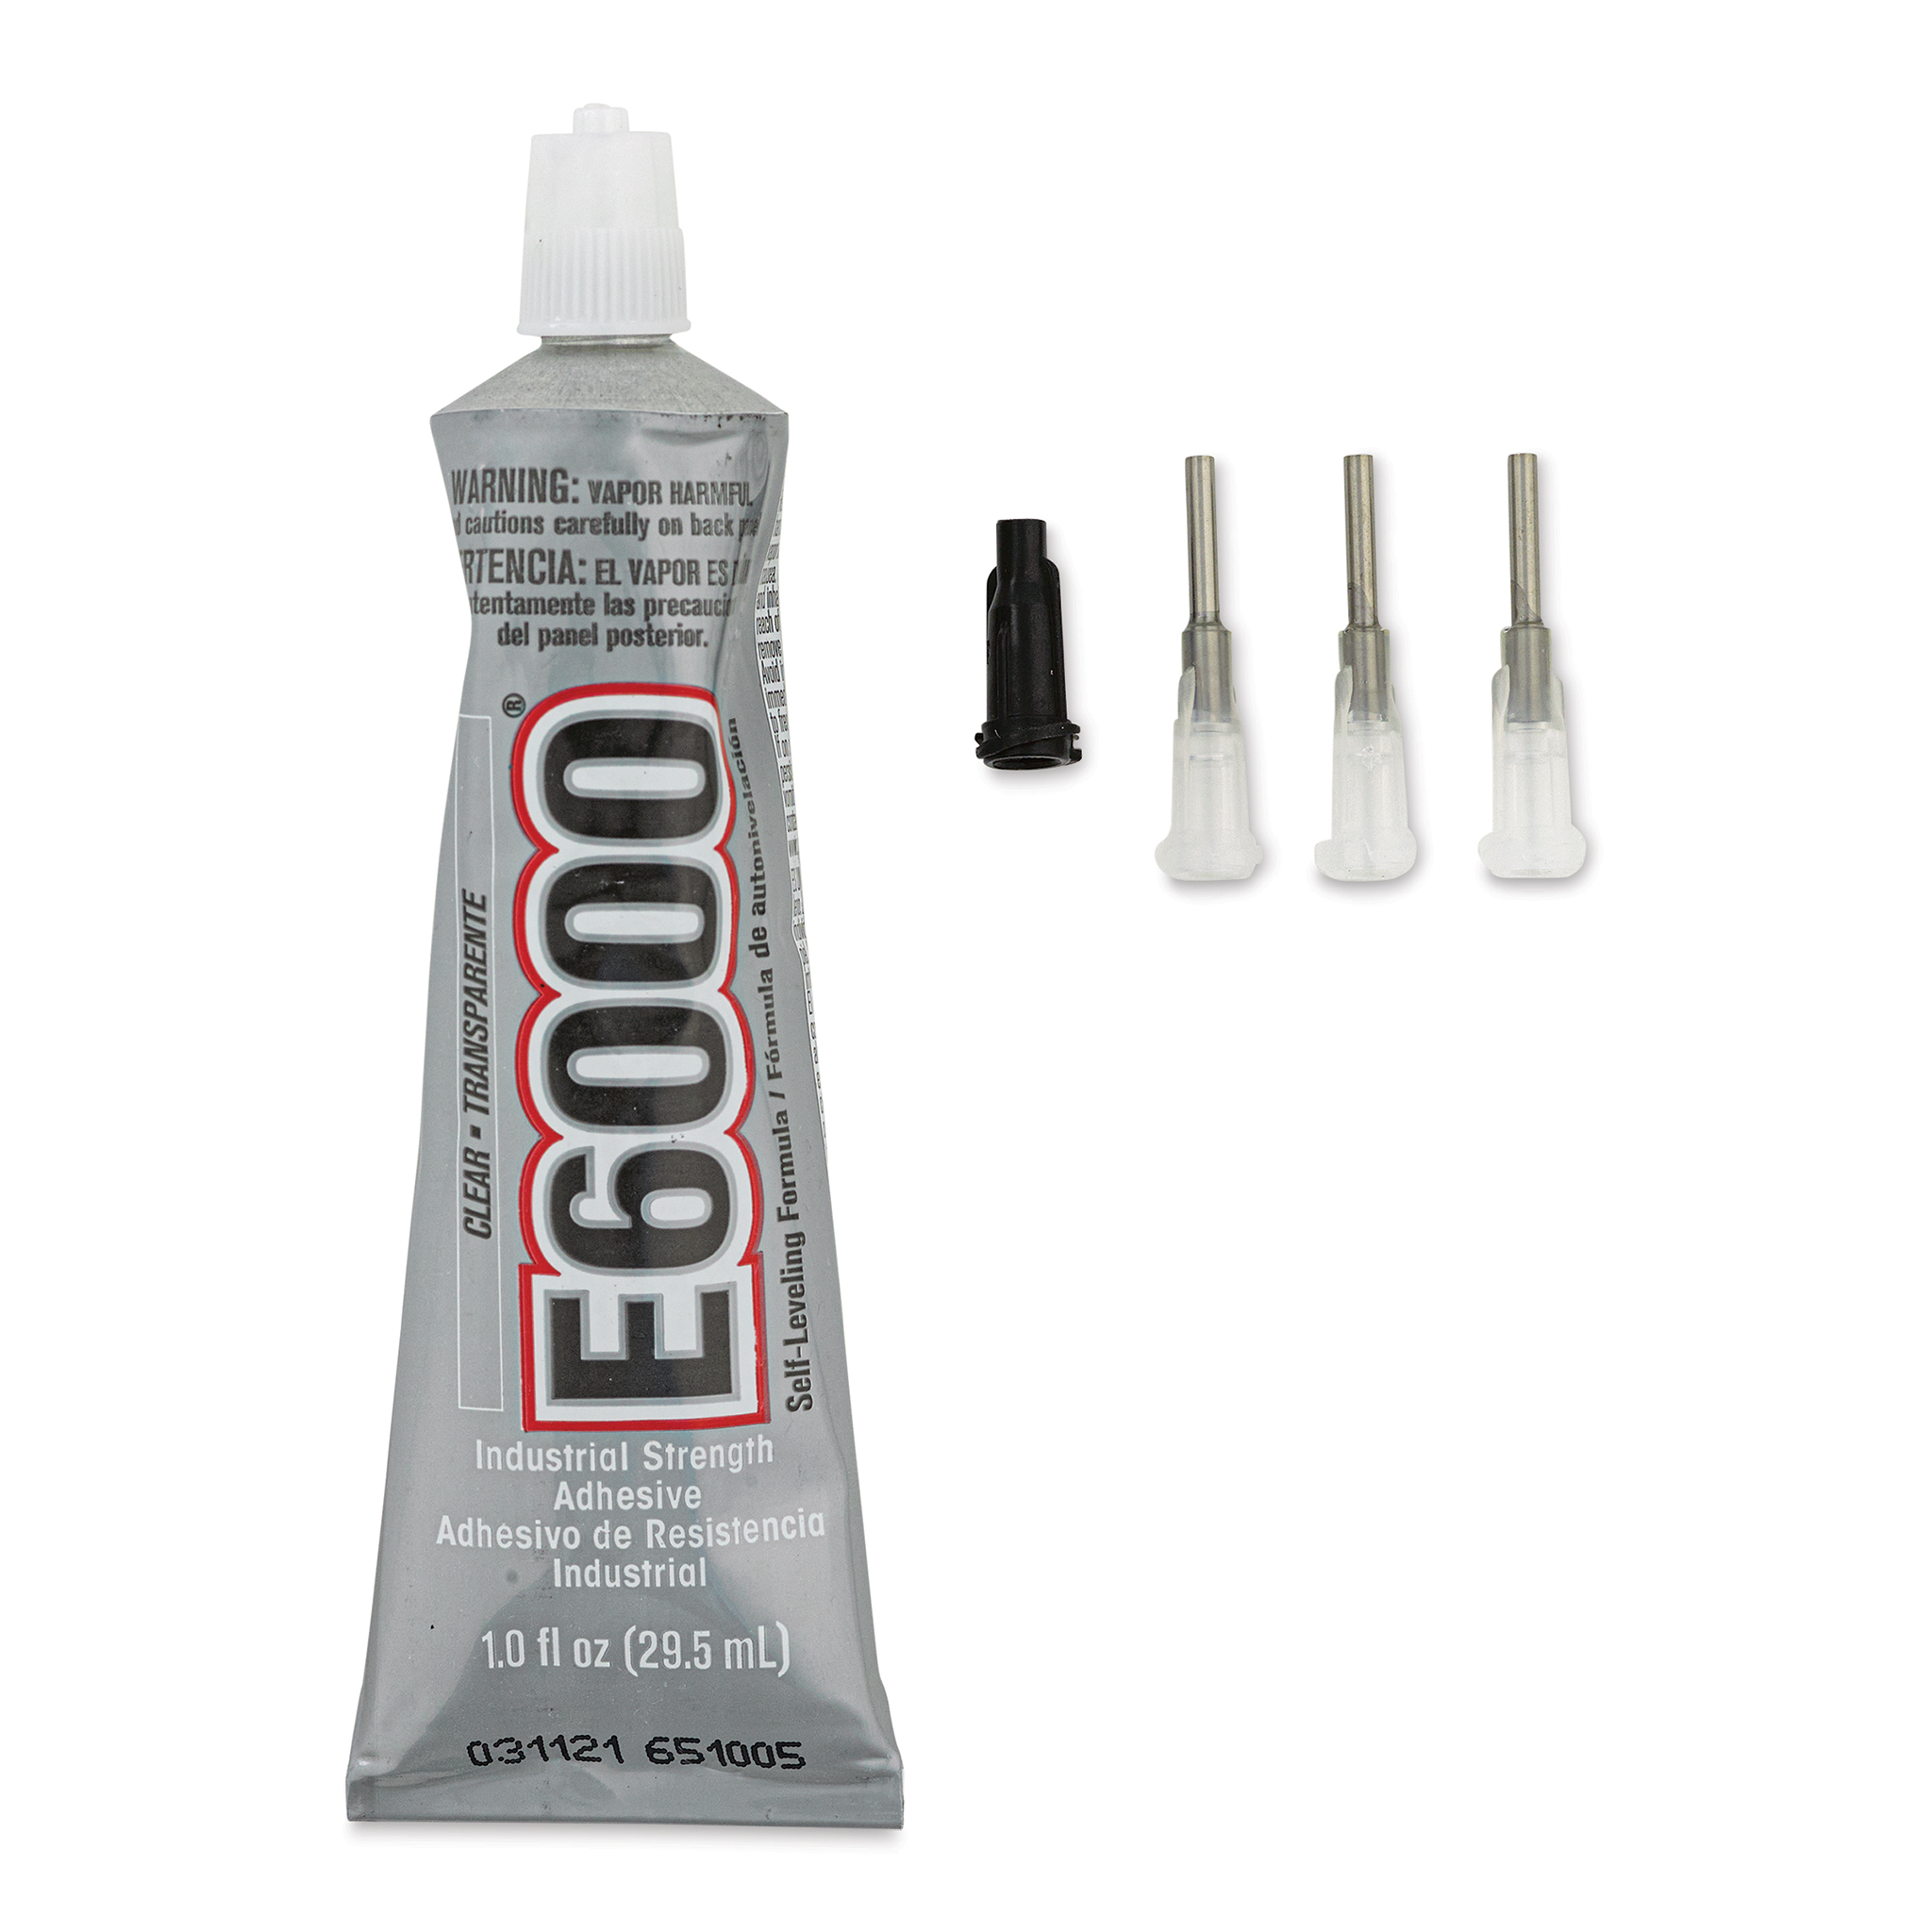 E-6000 Glue Mini Tubes, Adhesive for Crafts, Glue for Craft, Multi  Purpose Glue, Transparent, Pack of 4